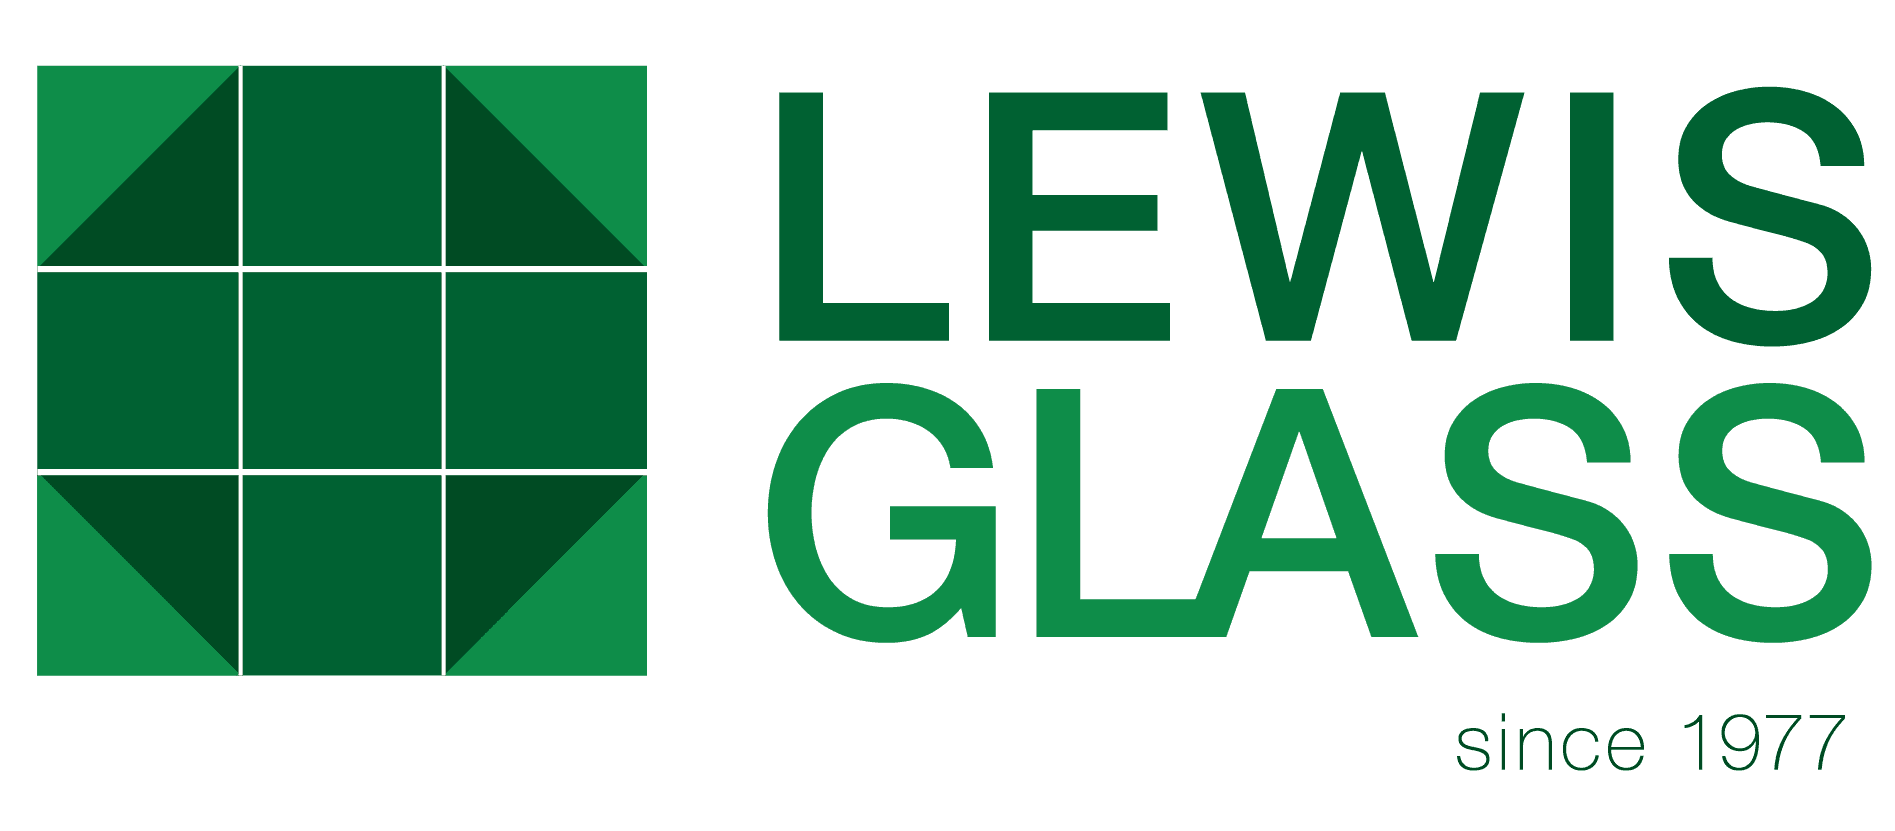 lewis glass company